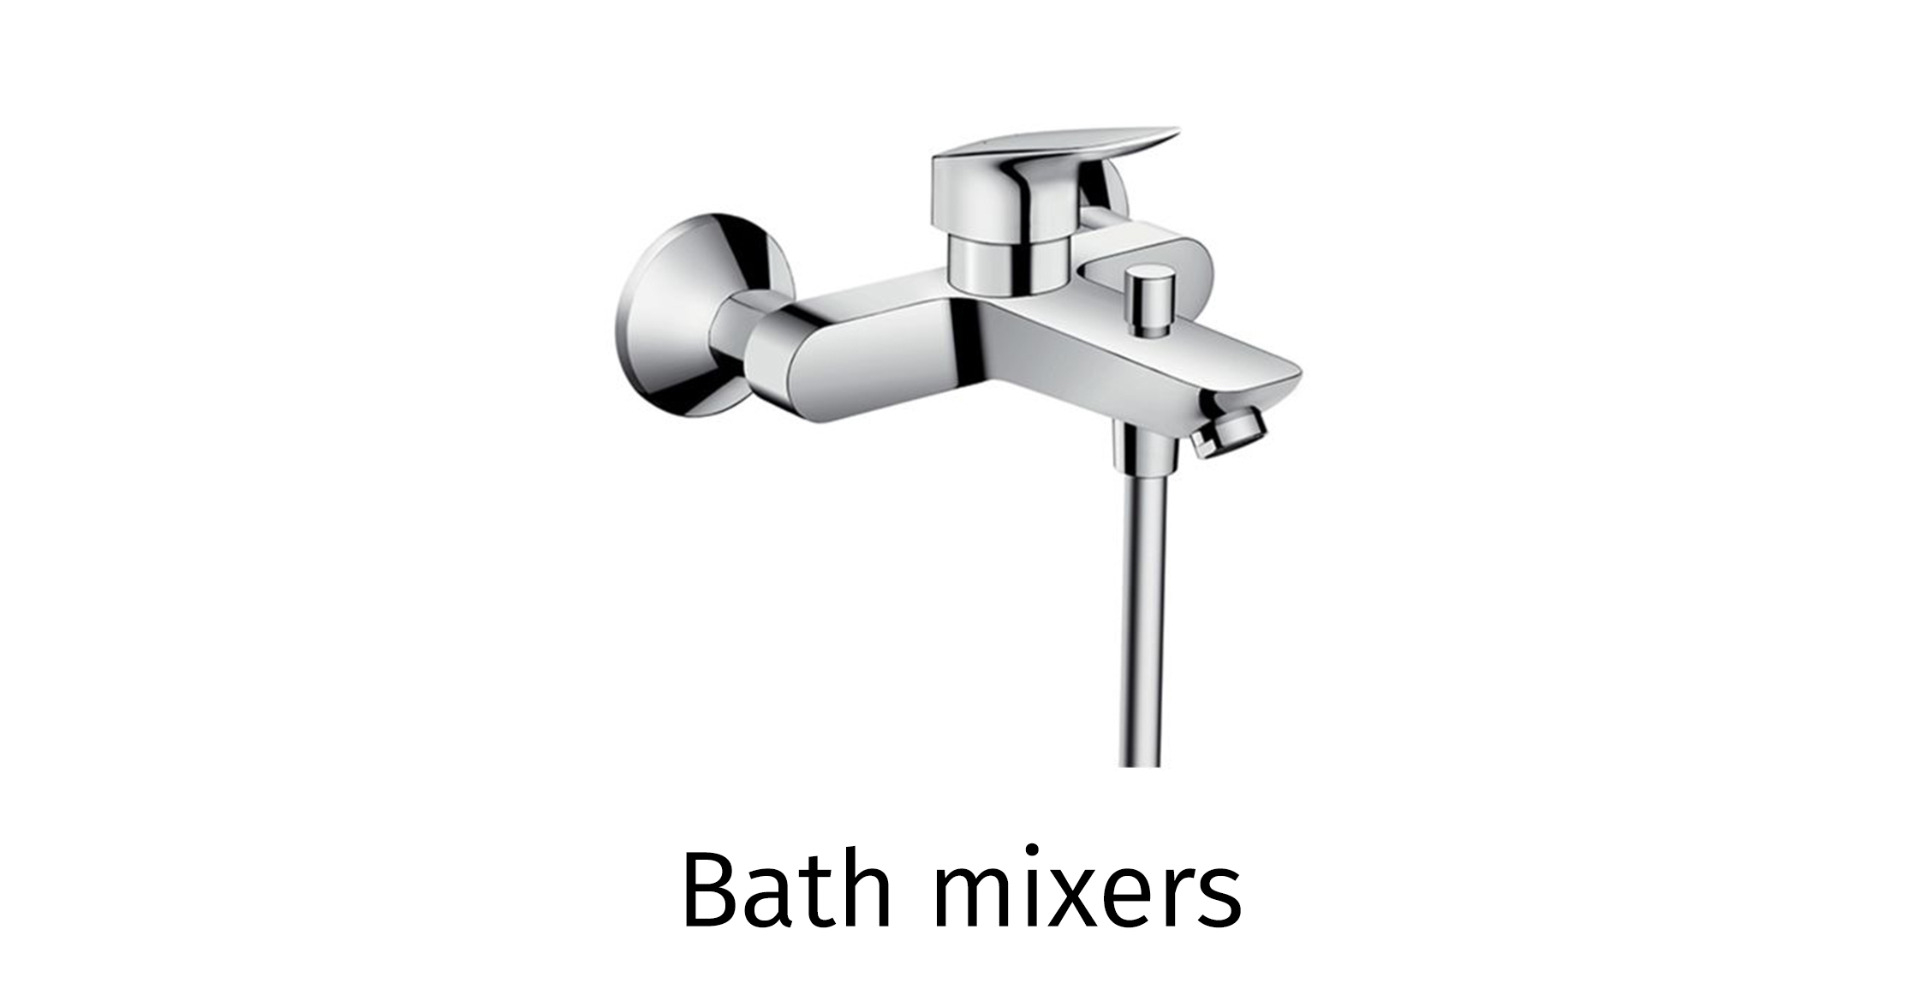 Bath mixers